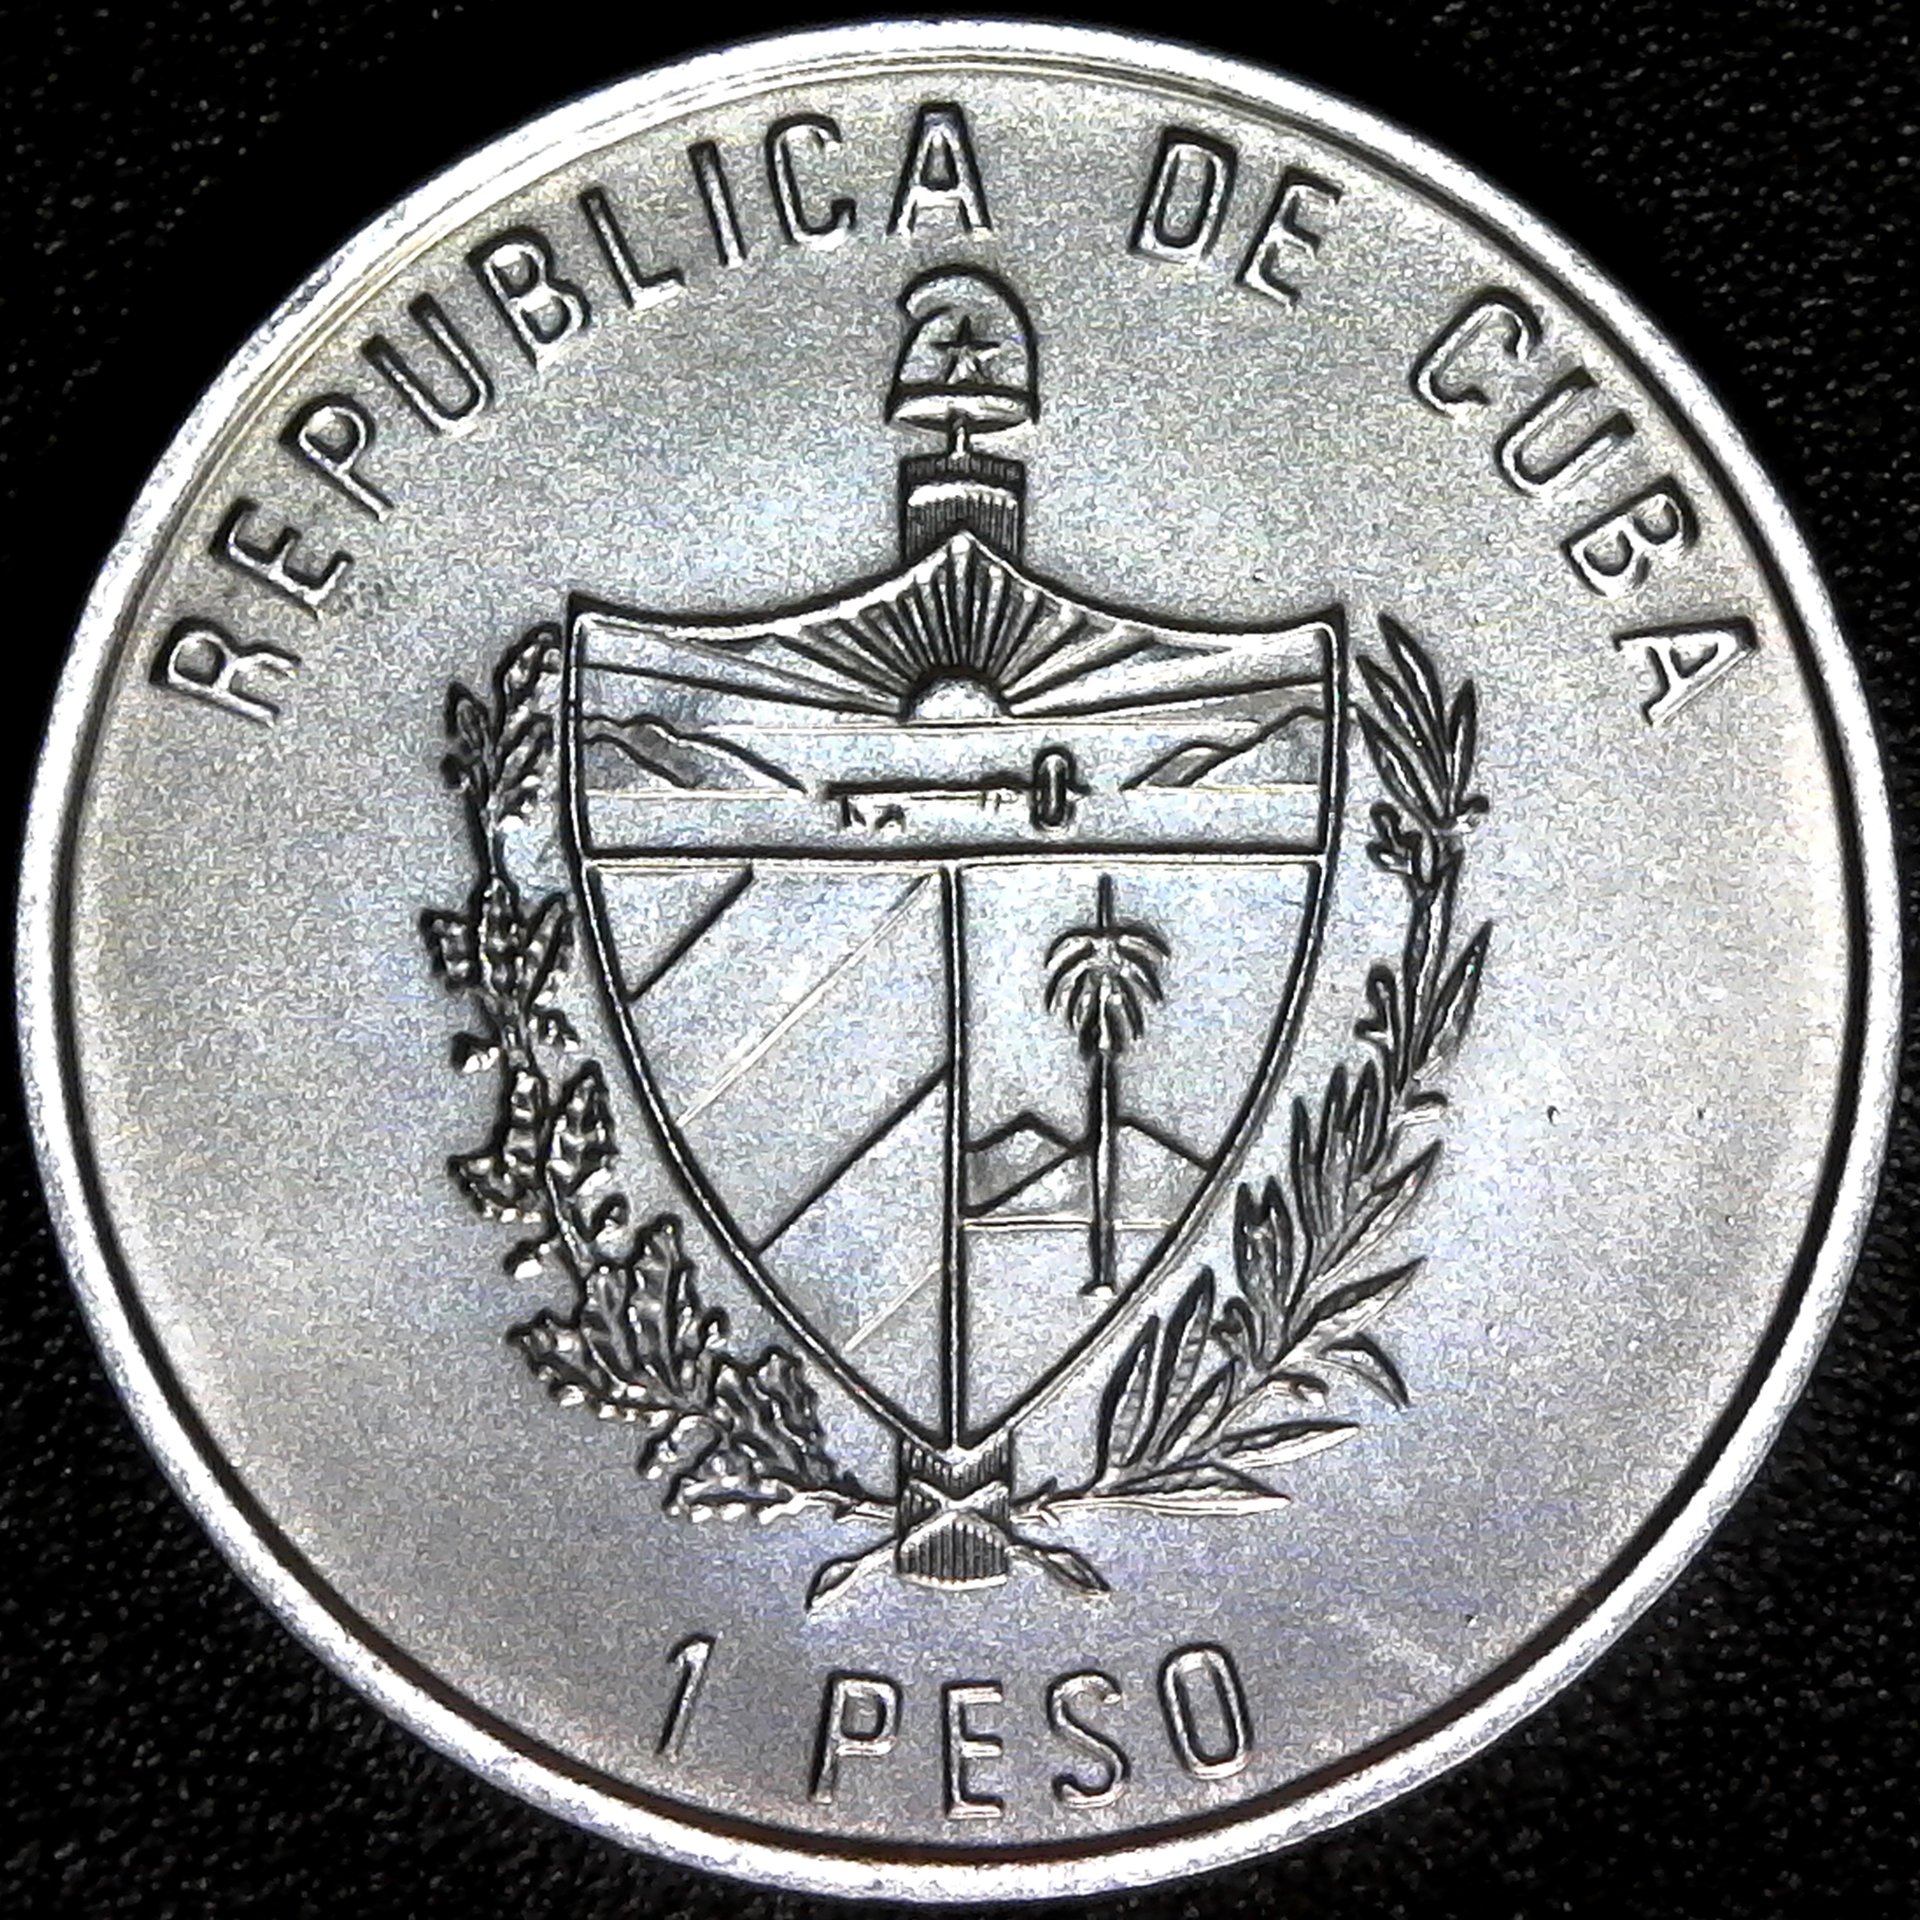 Cuba One Peso Avellanedas 2001 rev.jpg